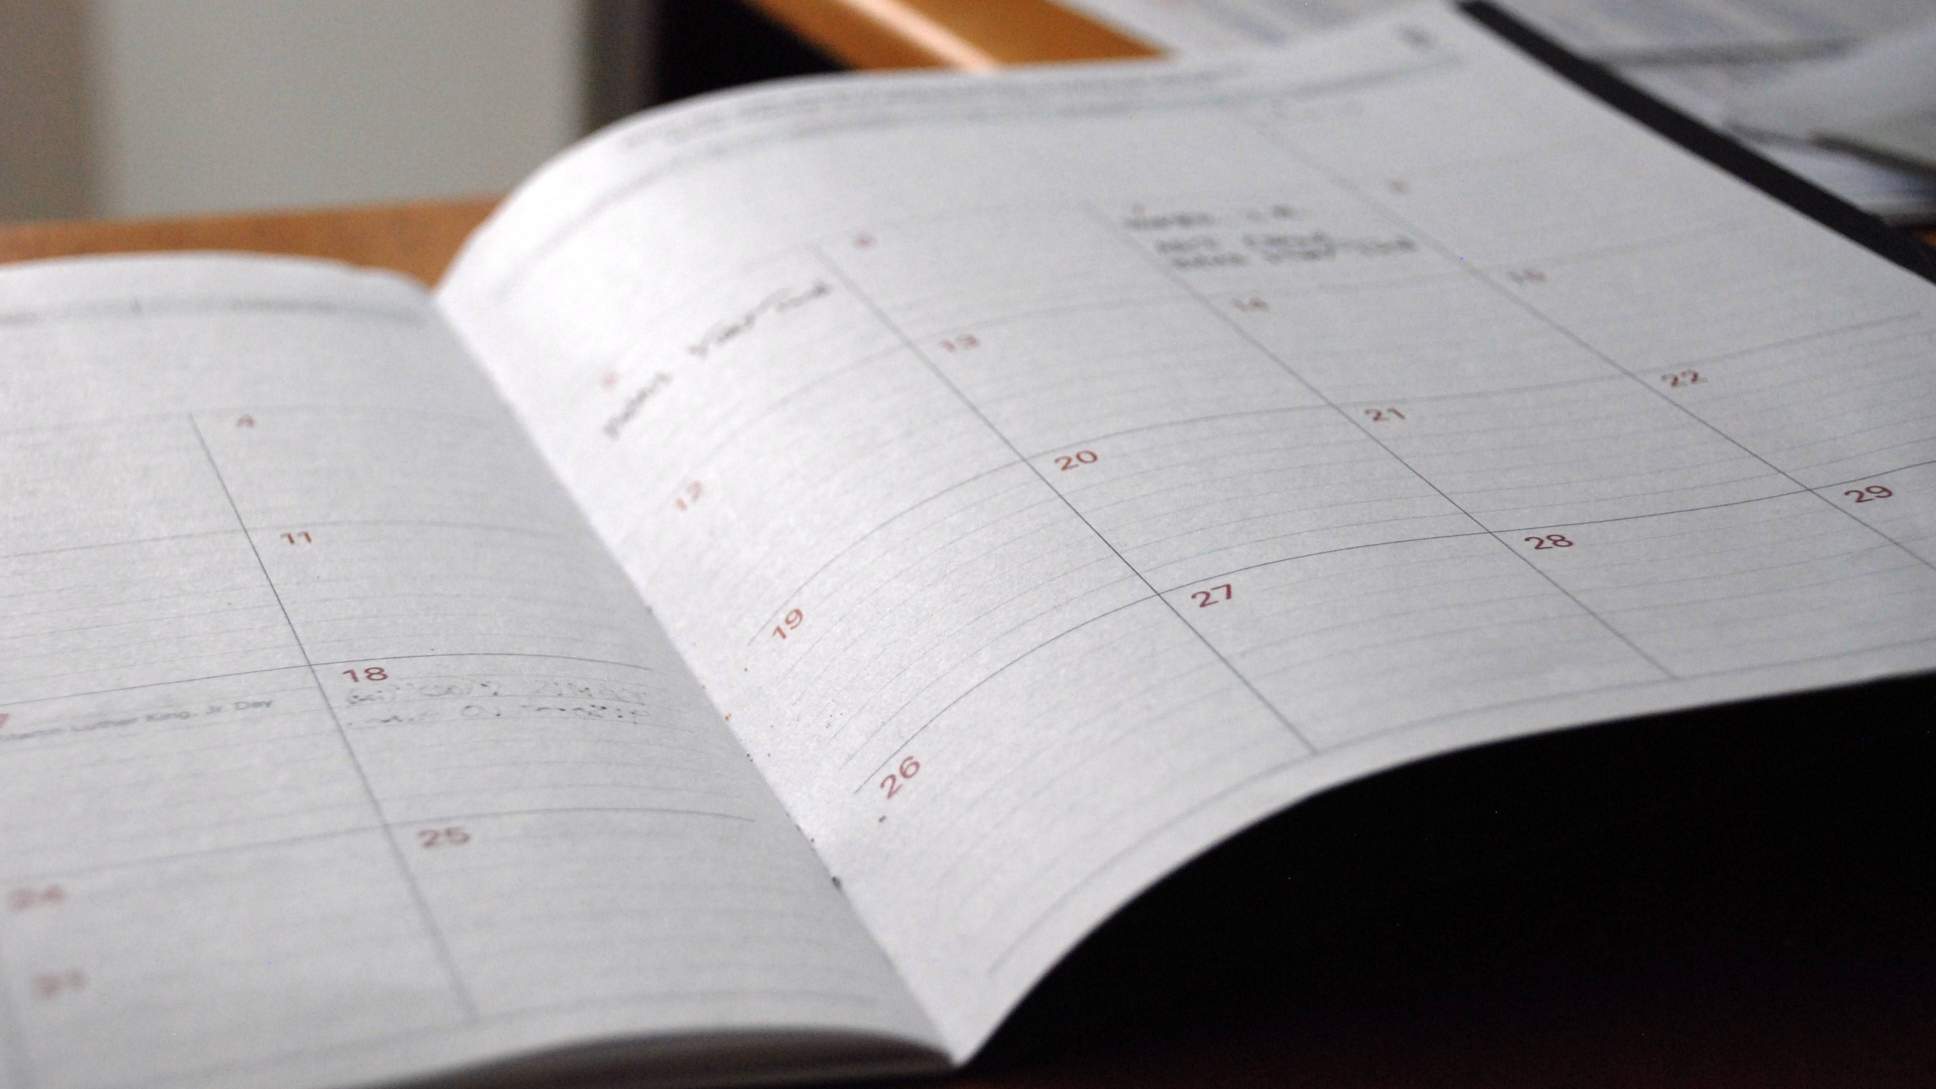 calendar on a desk